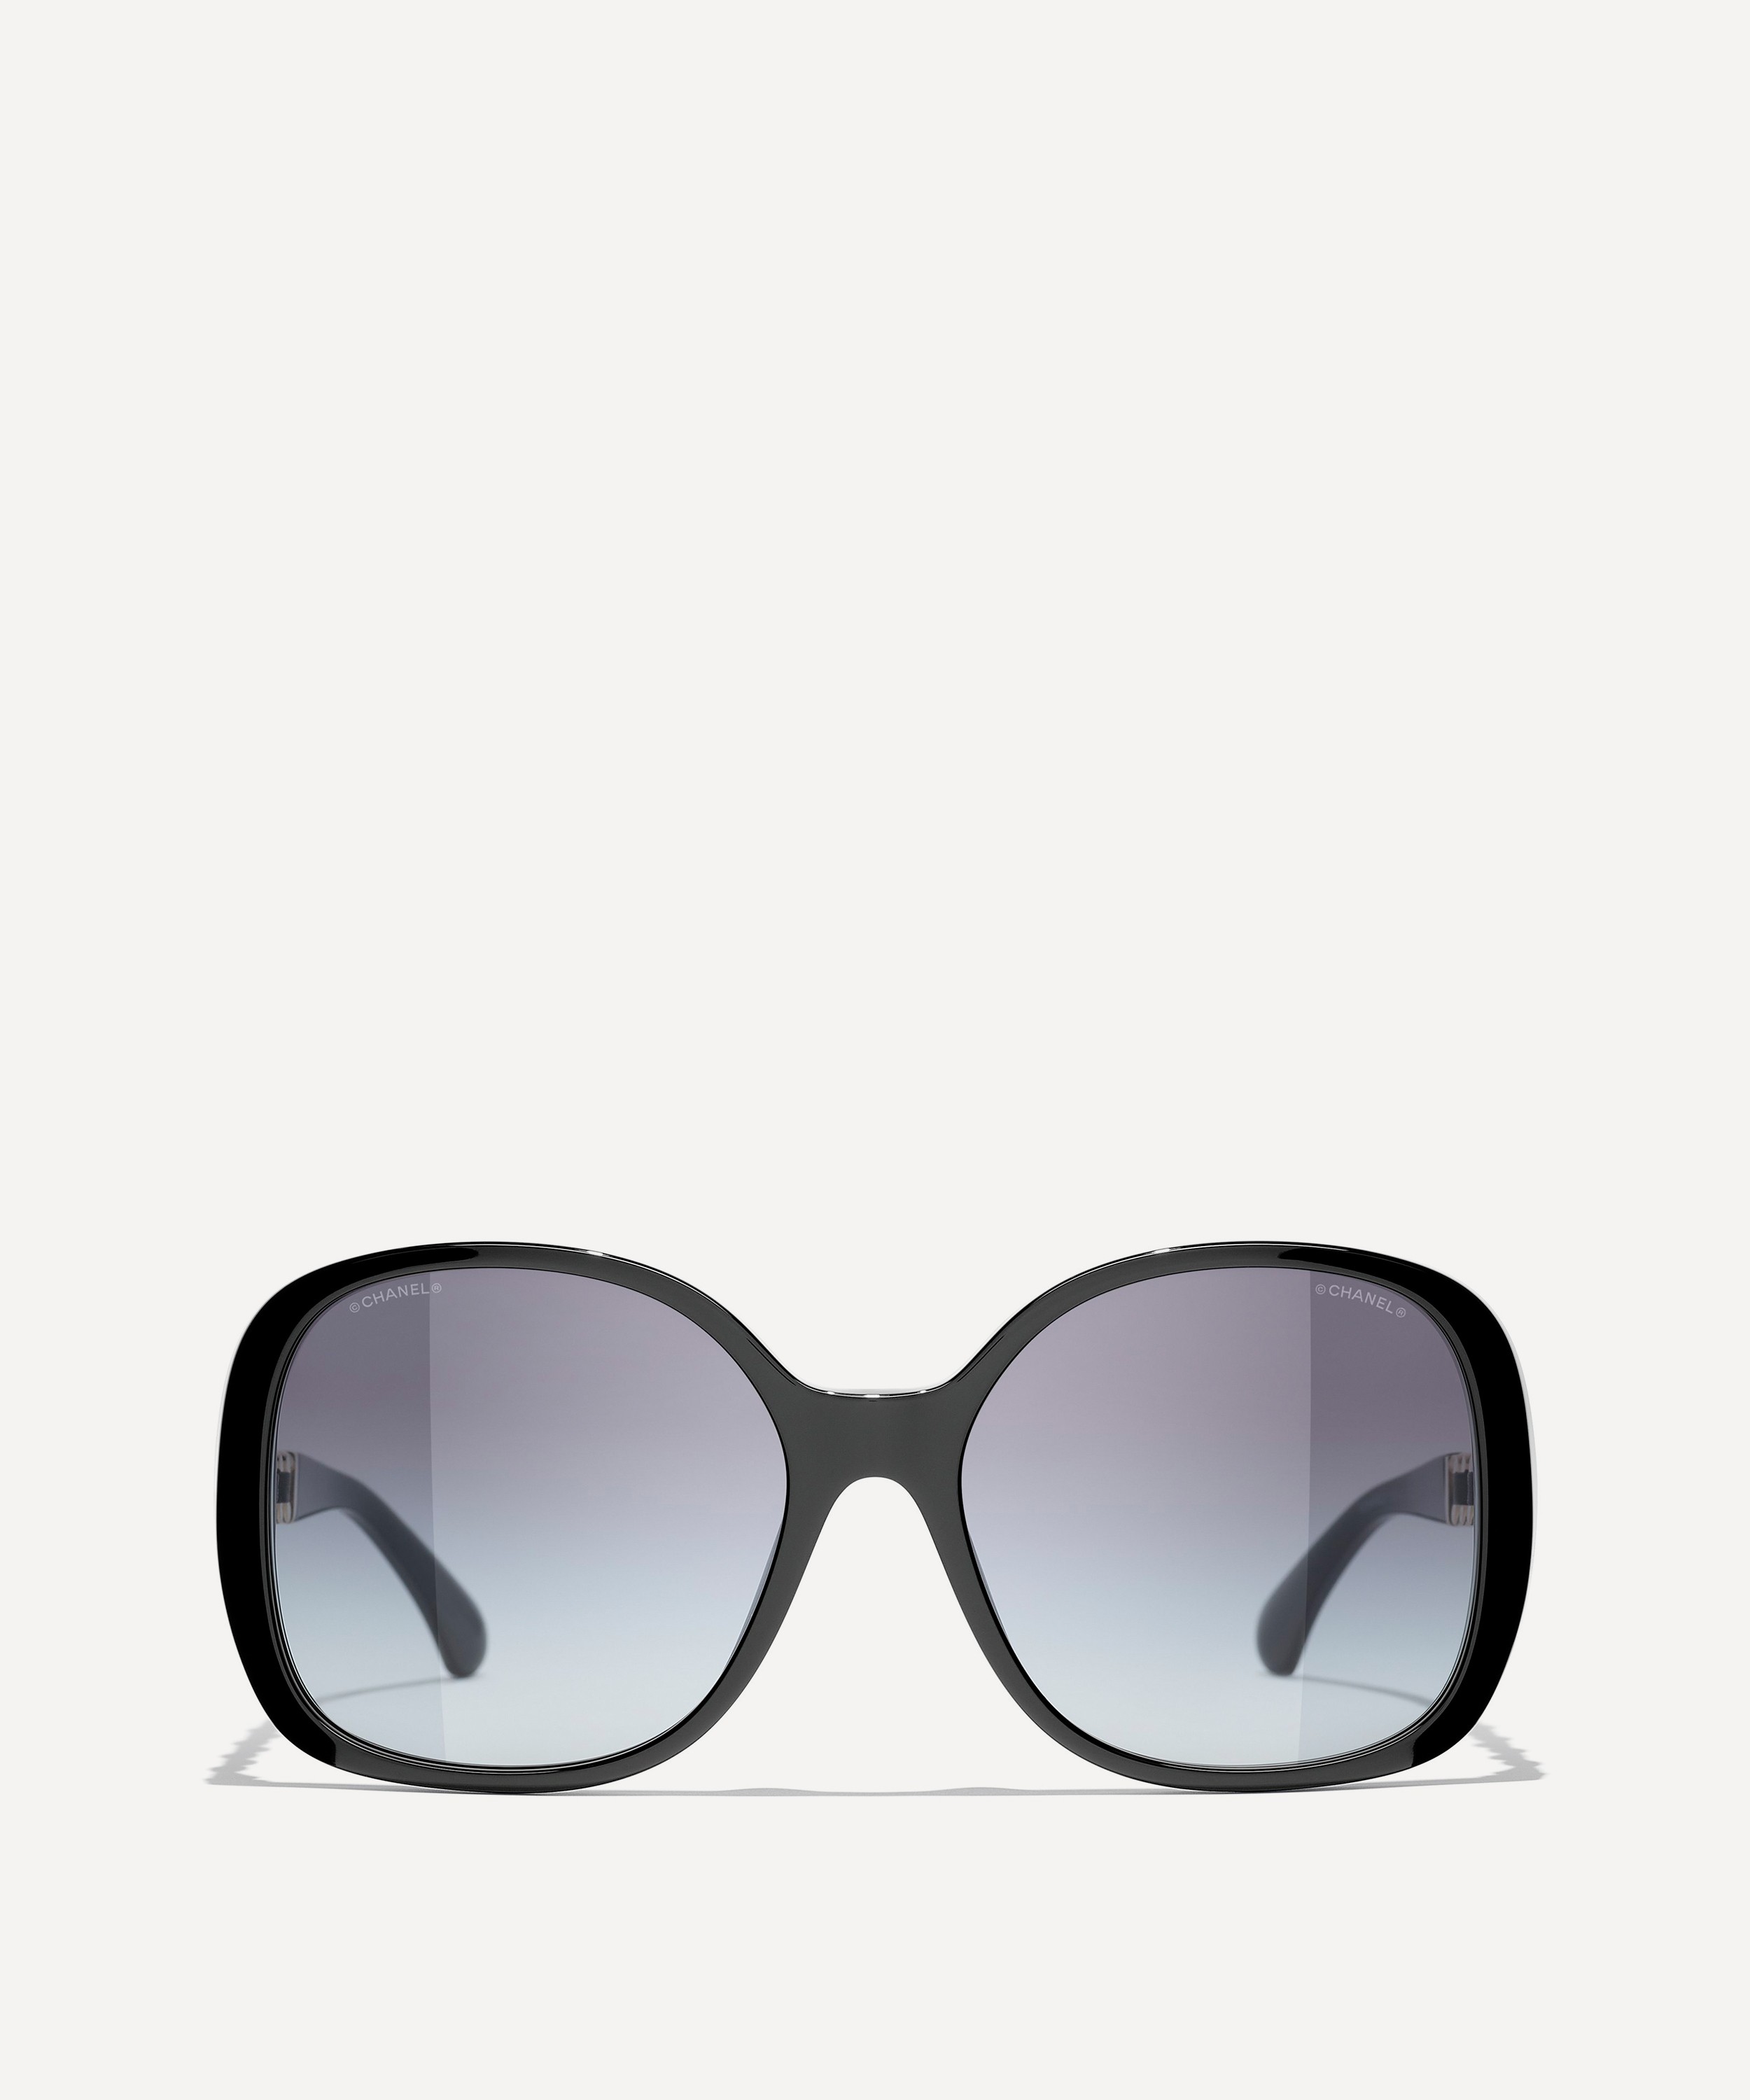 Chanel Black 5227 Oversized Square Sunglasses Chanel | The Luxury Closet